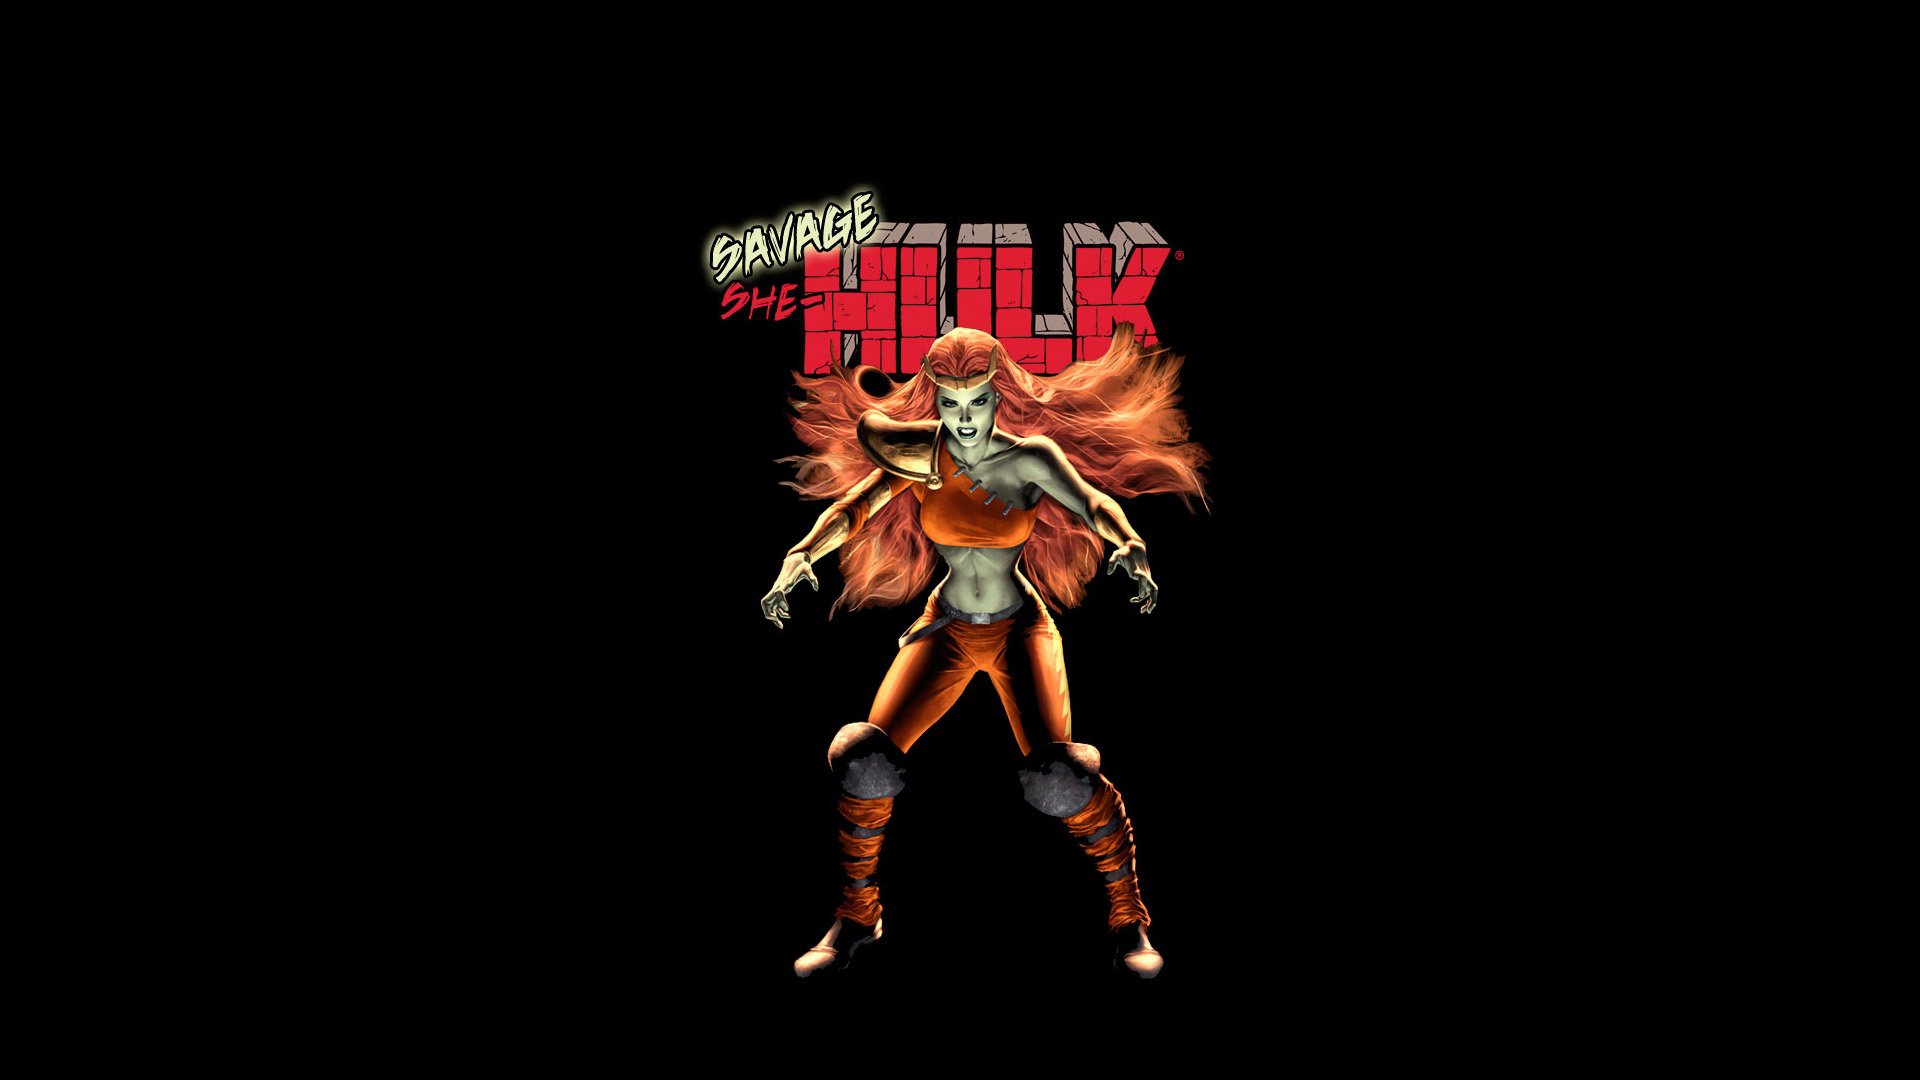 Savage She-Hulk Full HD Wallpaper and Background Image | 1920x1080 | ID